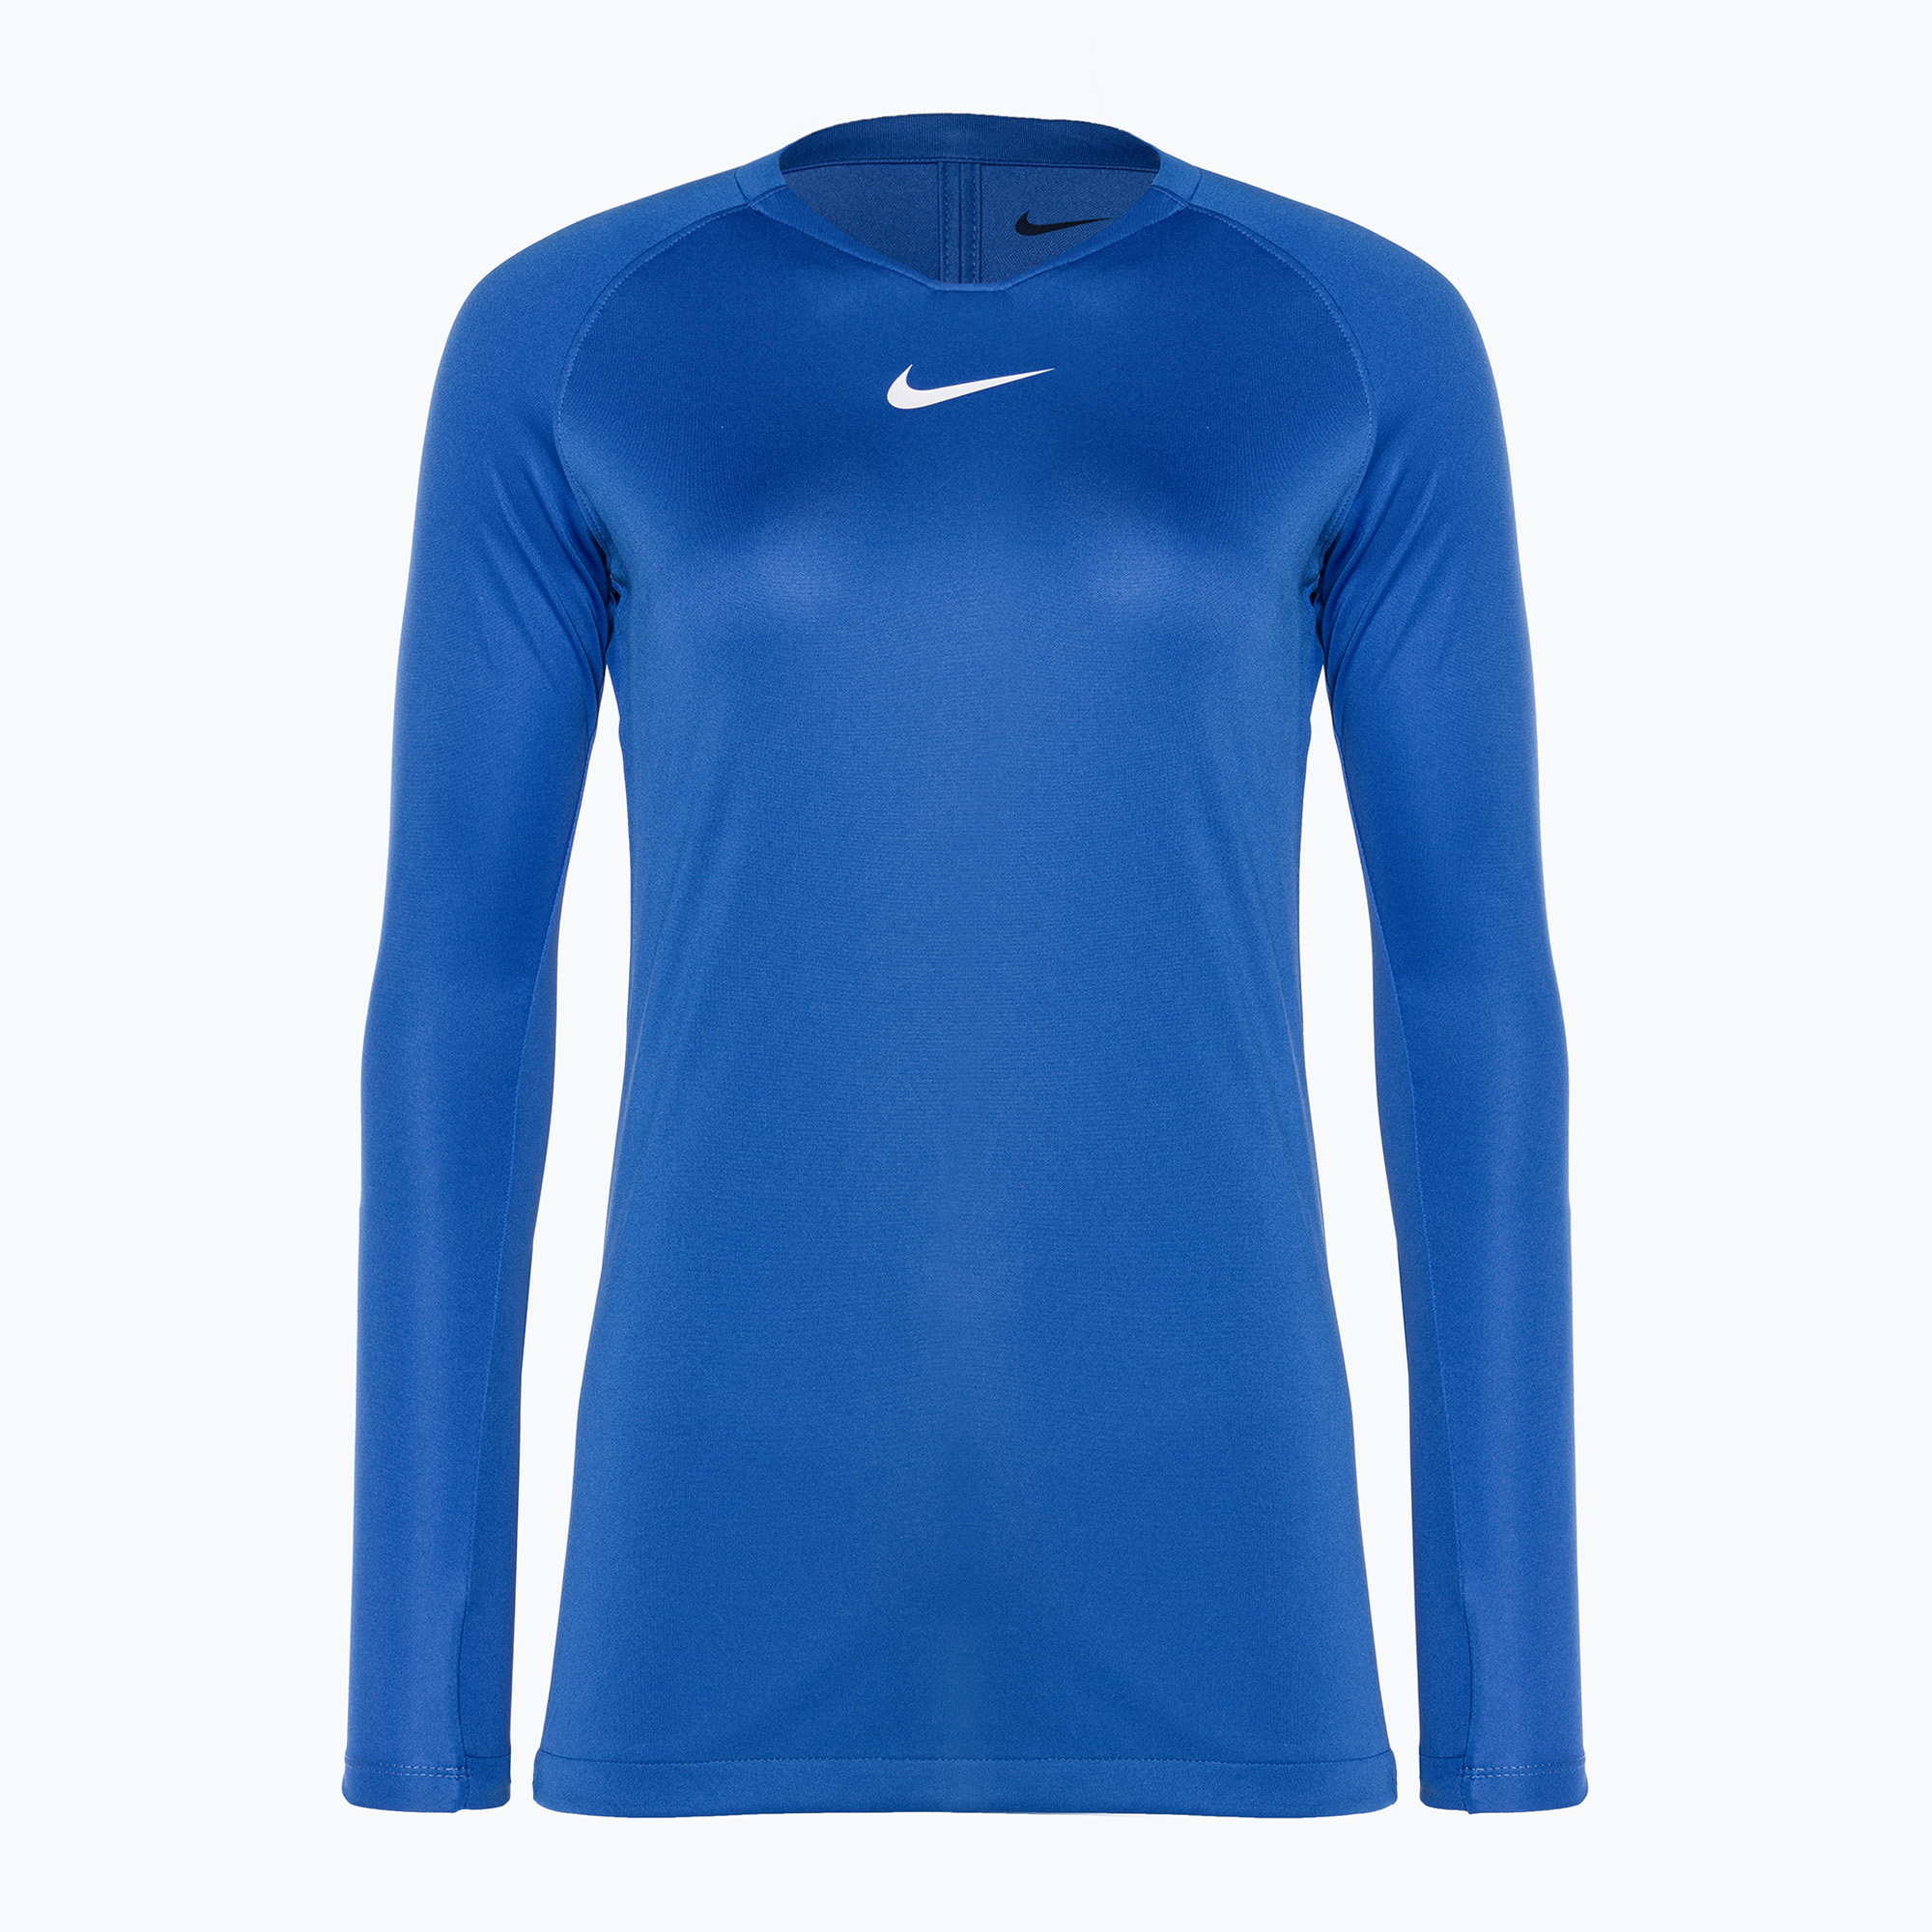 Longsleeve termoactiv pentru femei Nike Dri-FIT Park First Layer LS royal blue/white